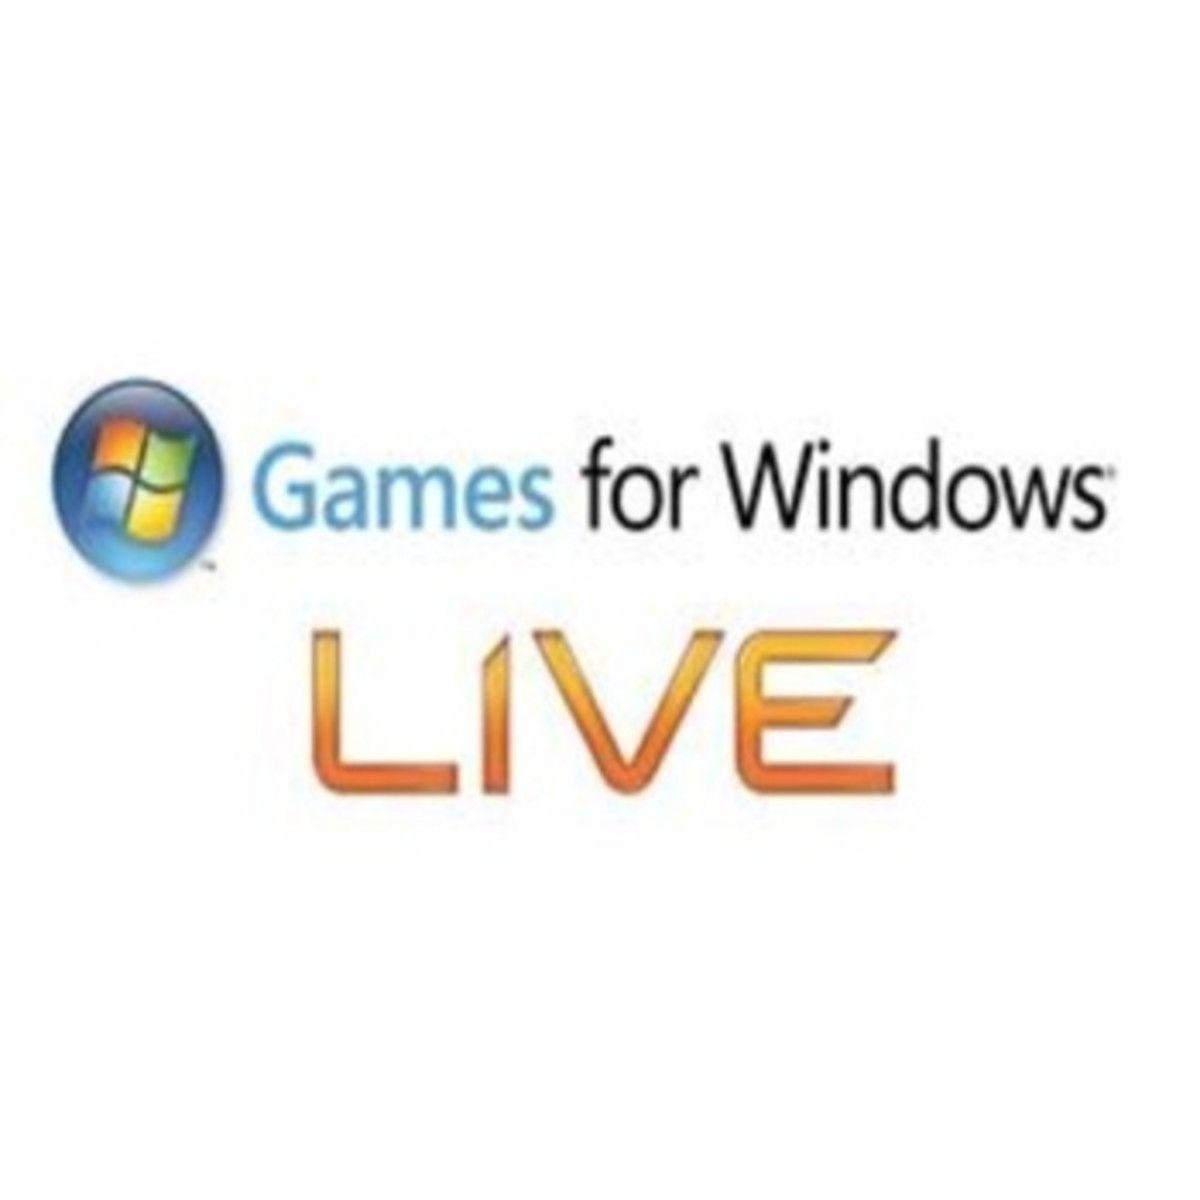 Games for Windows Live Logo - Microsoft's Games for Windows Live prepares to live no more